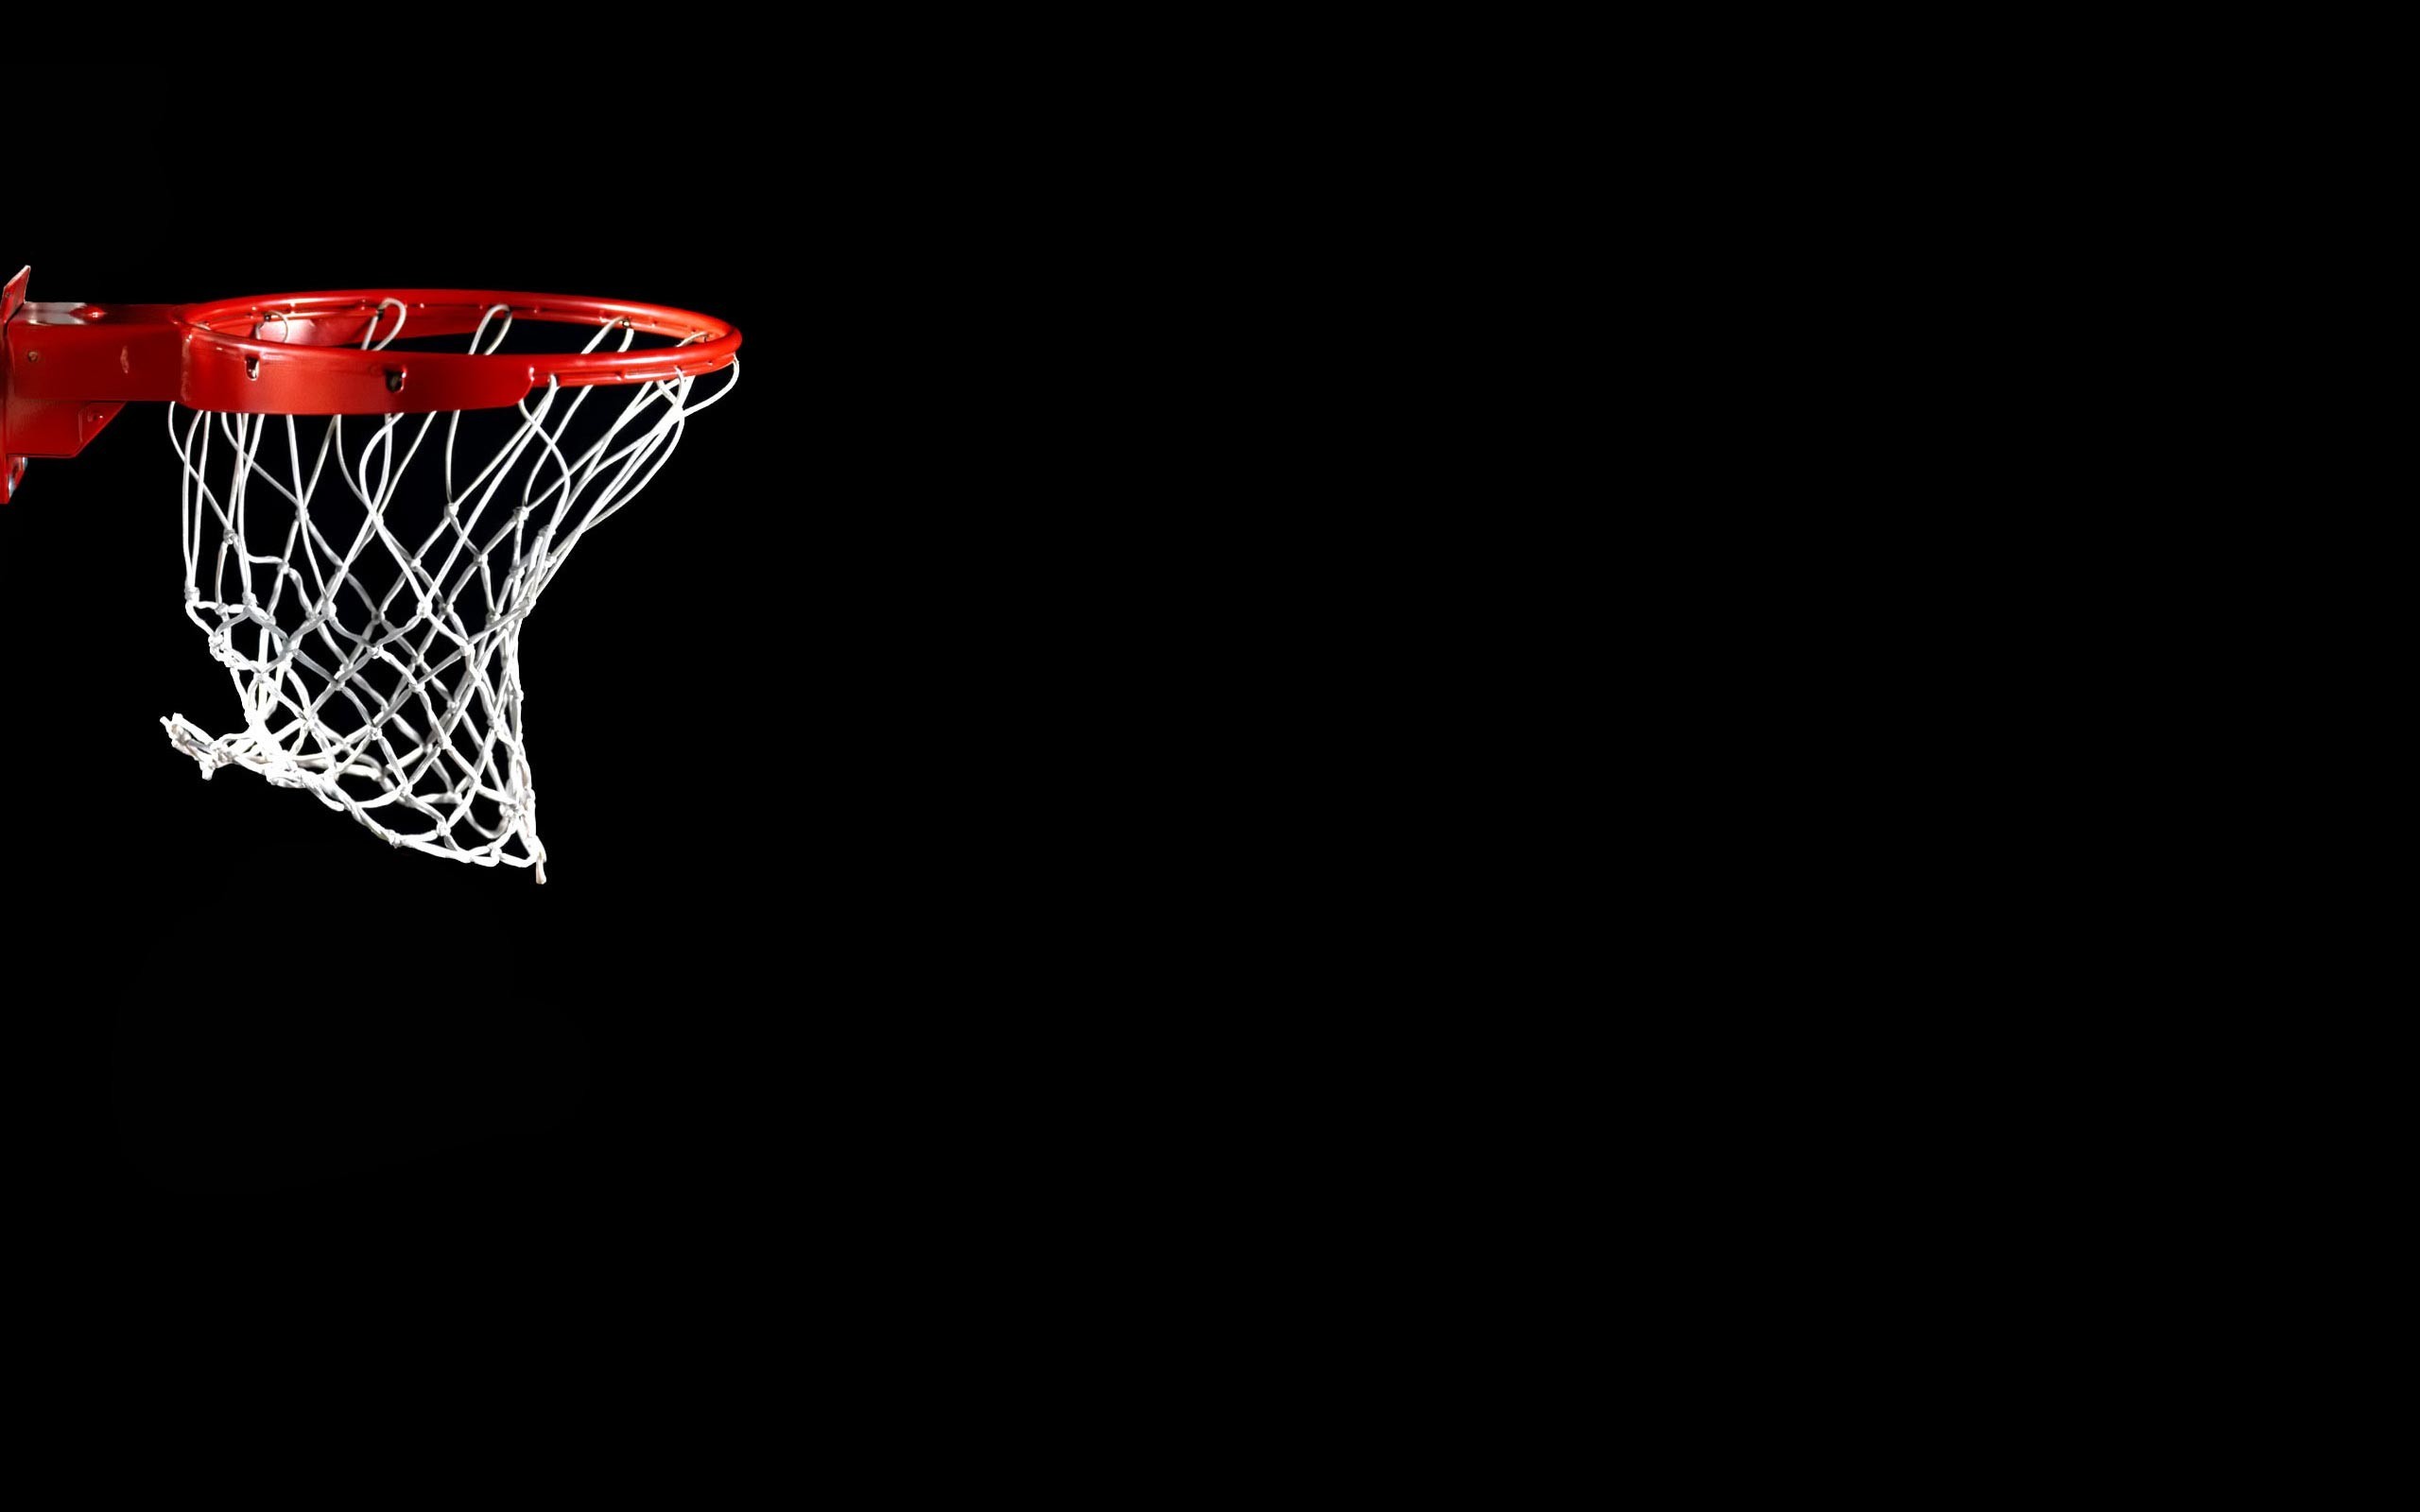 Free Basketball Wallpaper Download – https://www.youthsportfoto.com/free